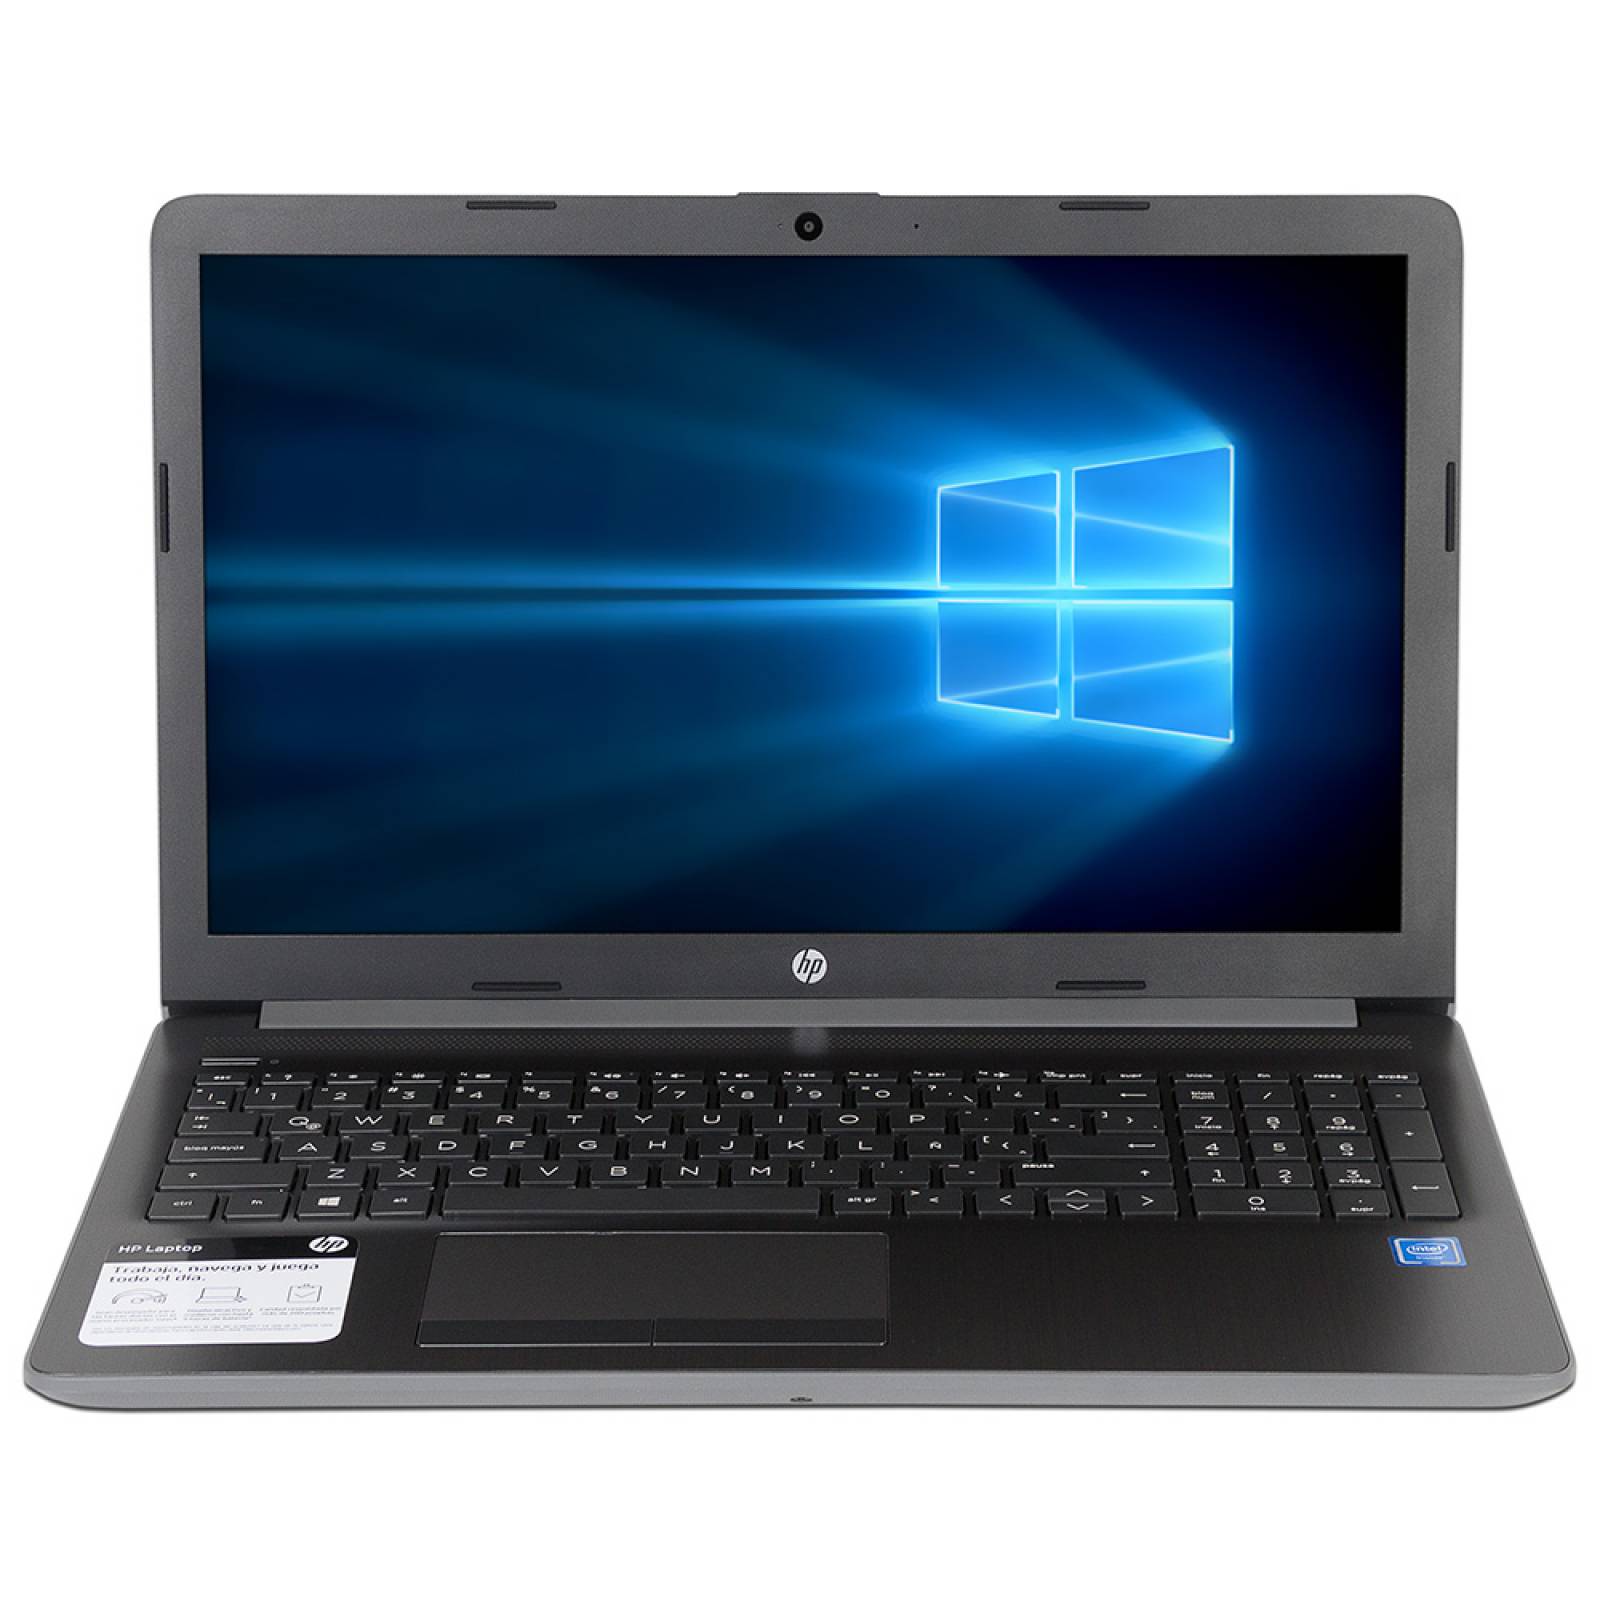 Laptop HP 15-da0001la Procesador Intel Celeron N4000 Memoria de 4GB DDR4, Disco Duro de 500GB Pantalla de 15.6 pulgadas LED Video UHD Graphics 600  S.O. Windows 10 Home